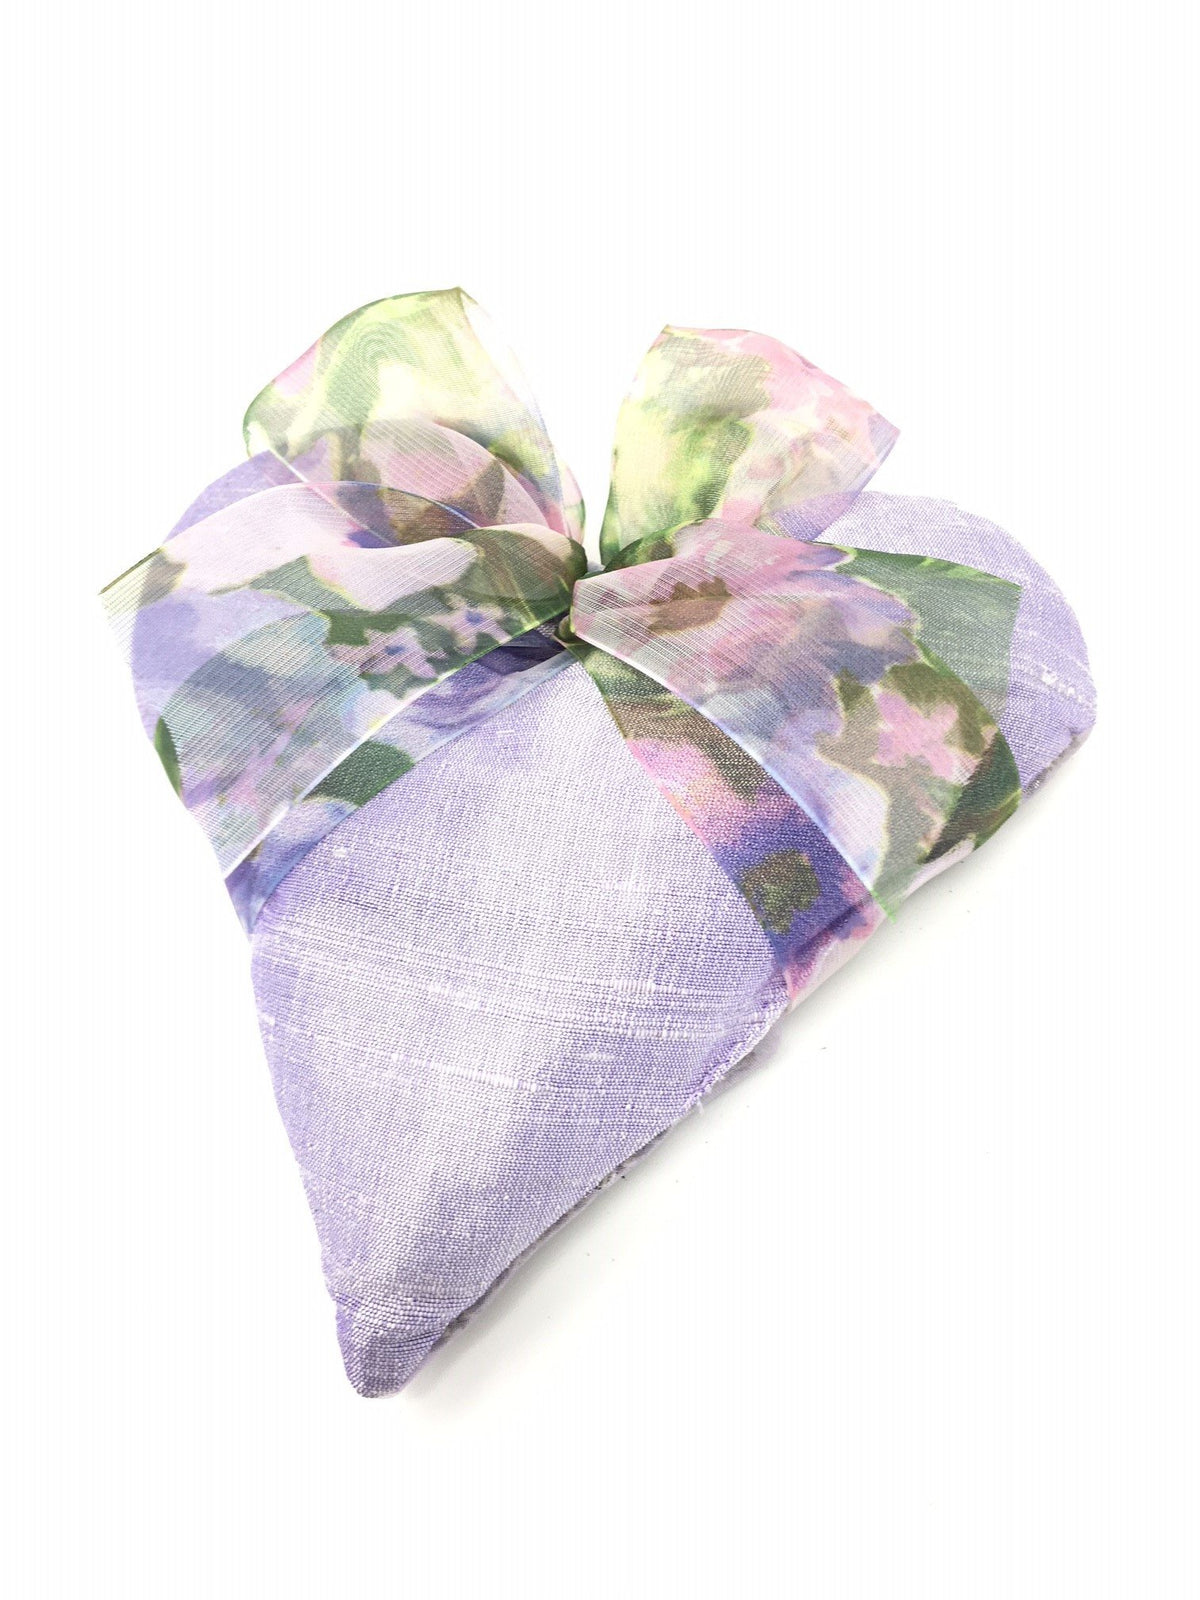 Sonoma Lavender Heart Sachets - Lilac Dupioni Silk